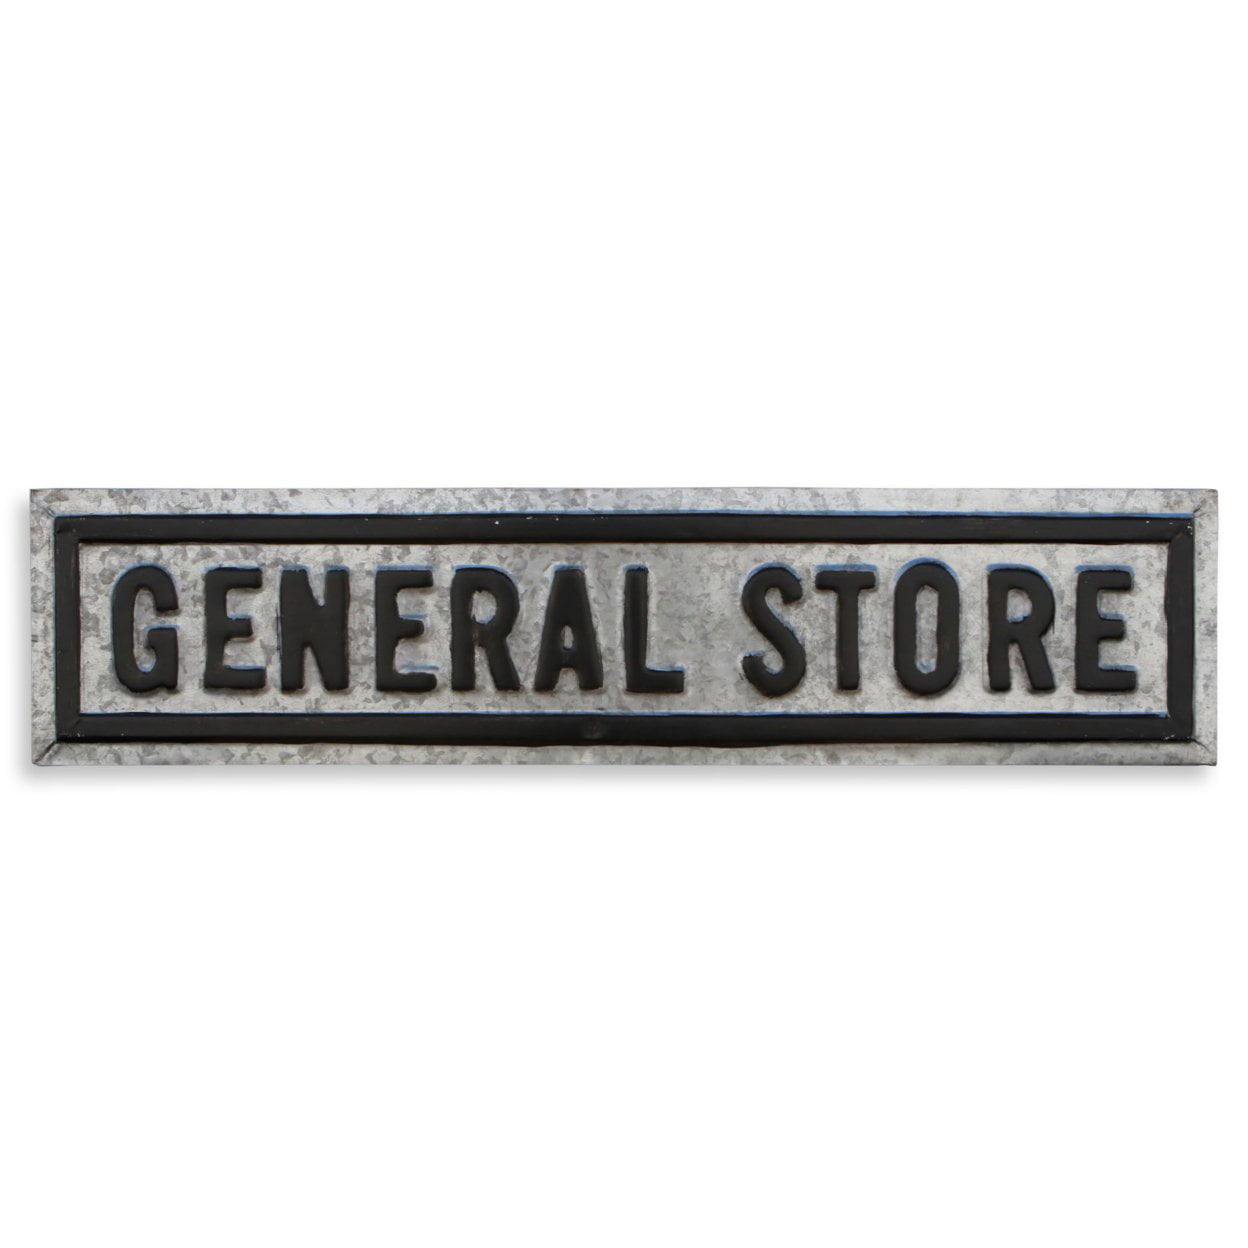 5001 Metal Wall Decor - General Store